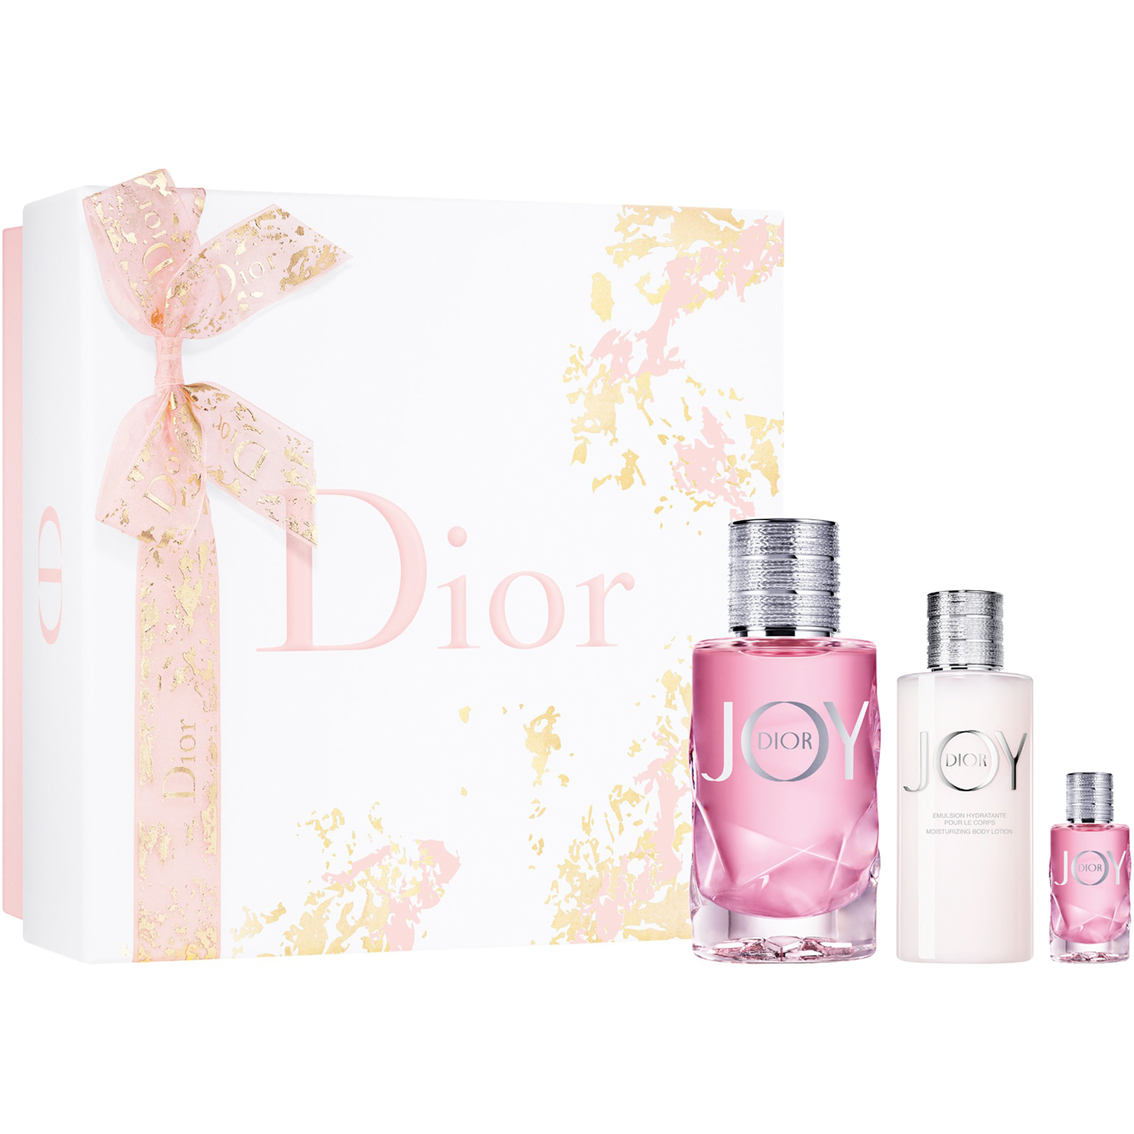 Dior Joy By Dior Eau Intense Gift Set 